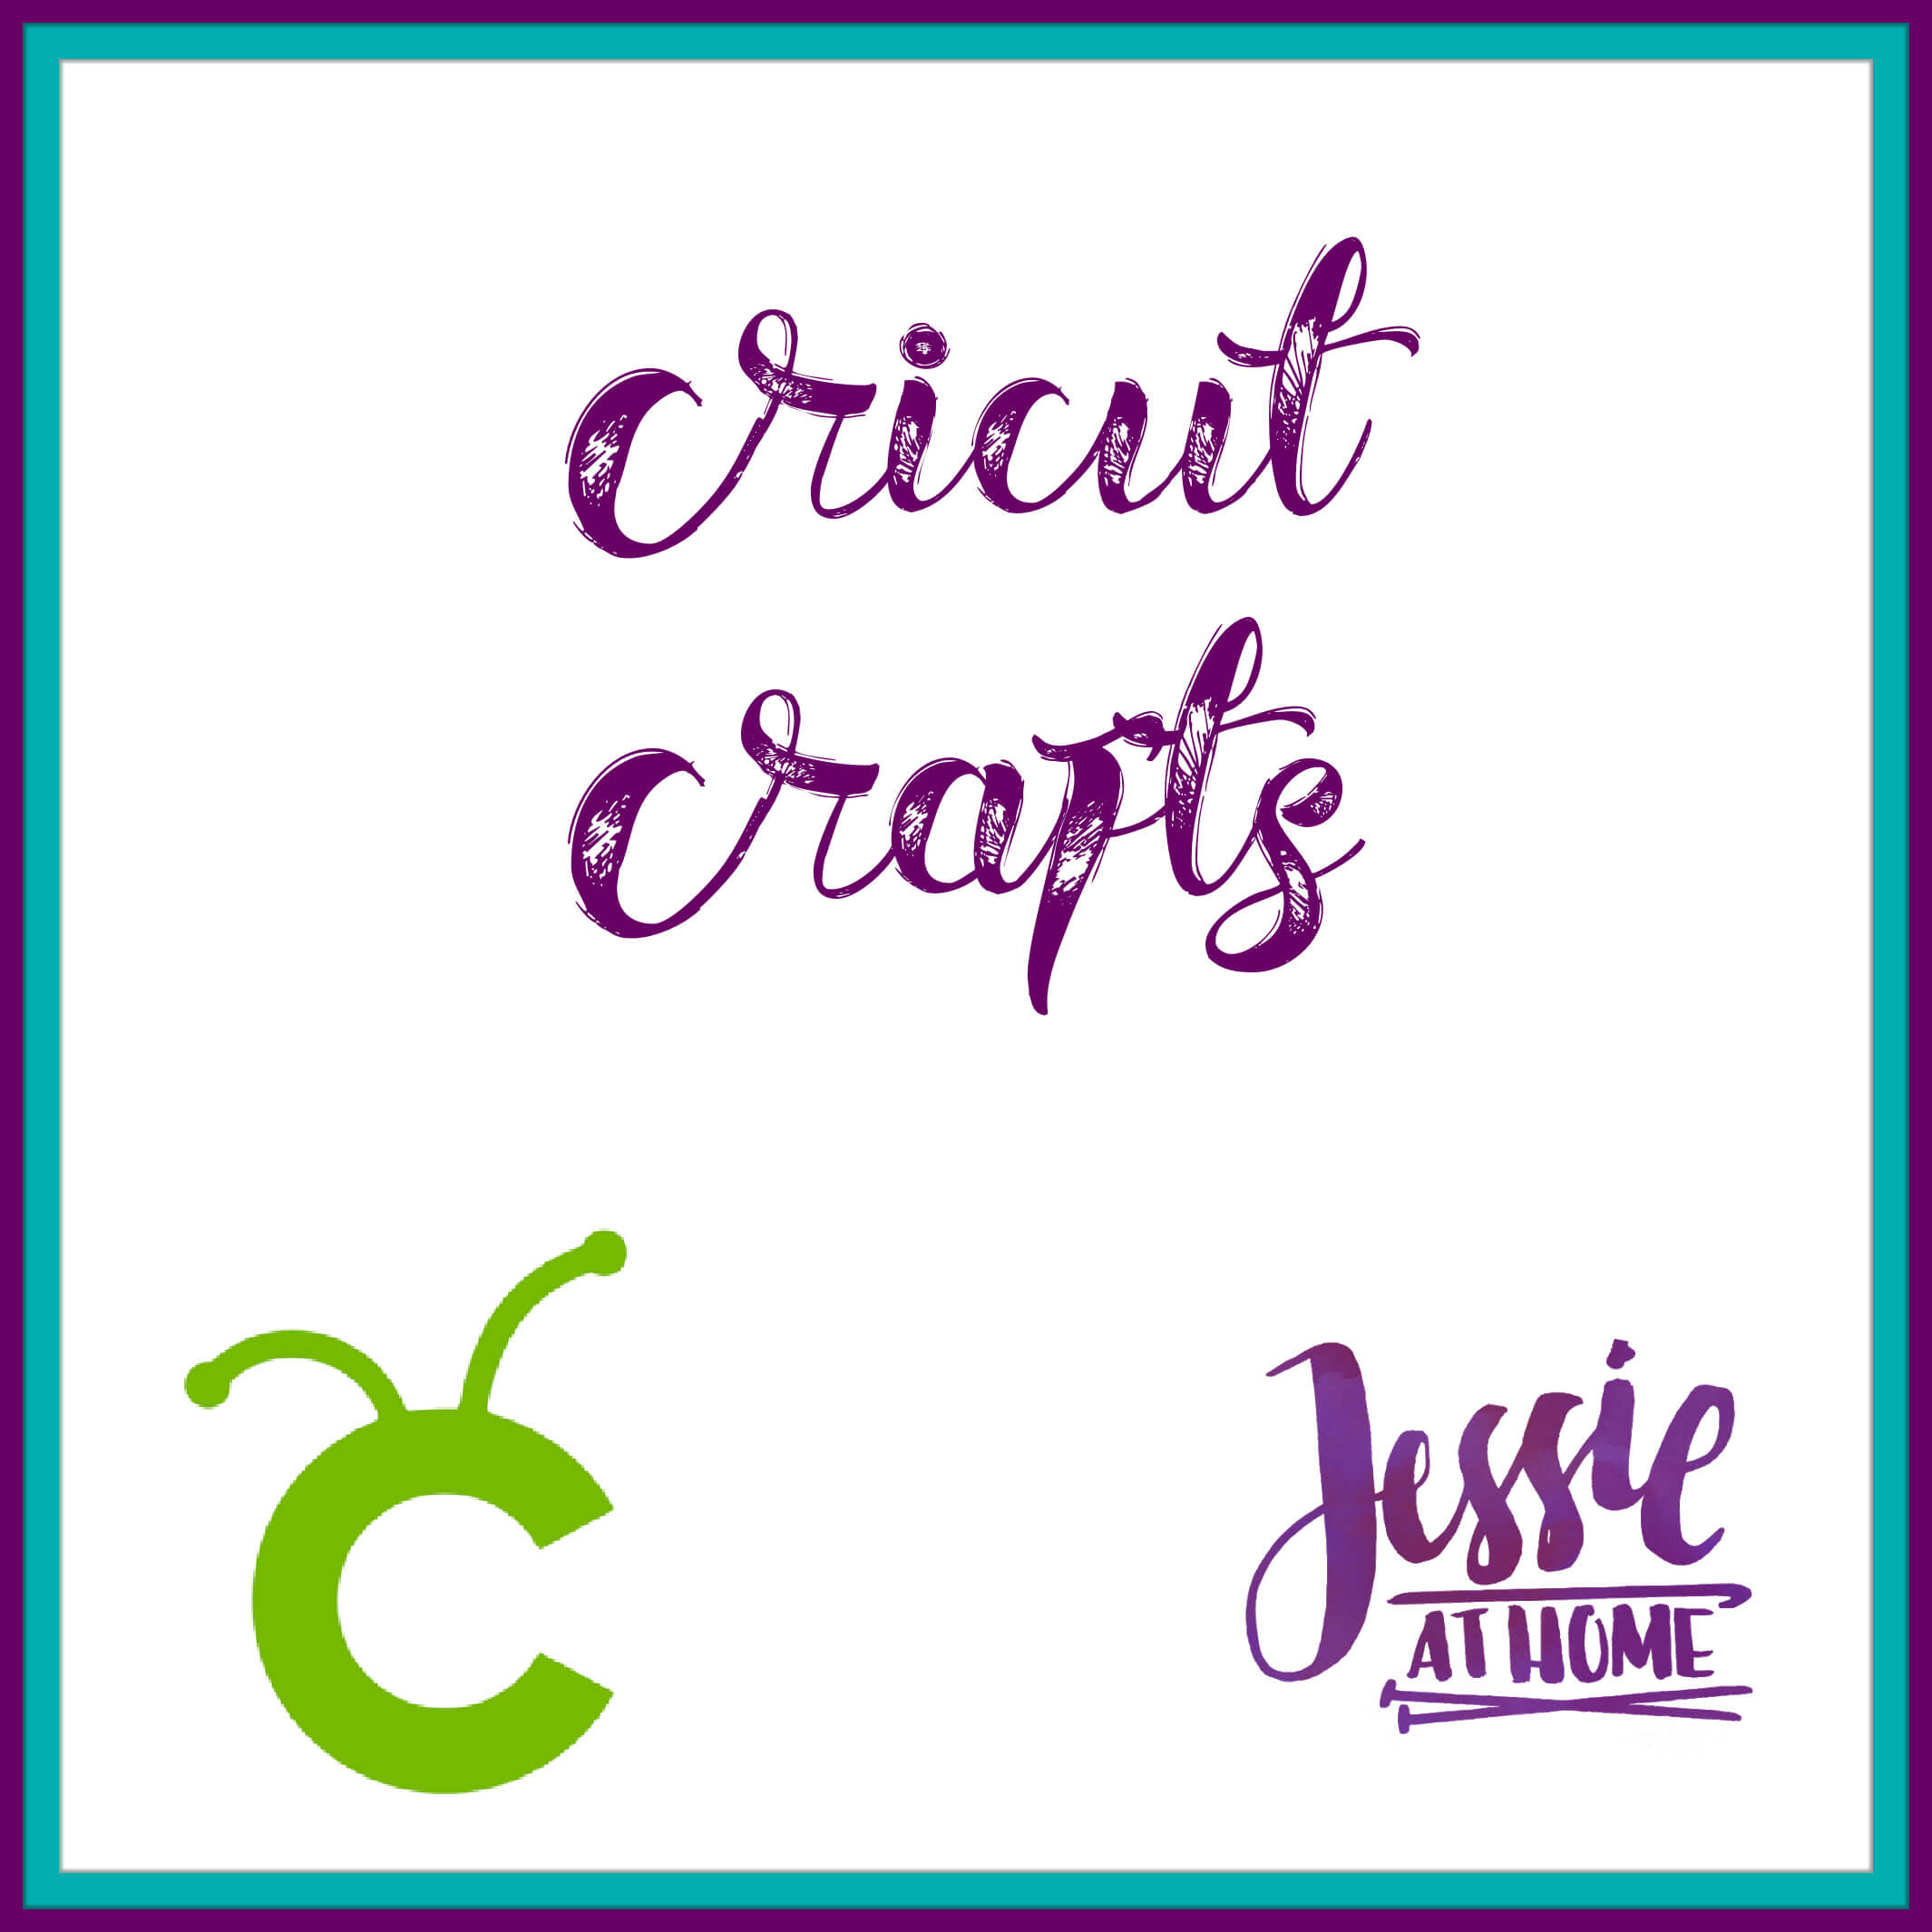 Cricut Crafts Menu on Jessie At Home